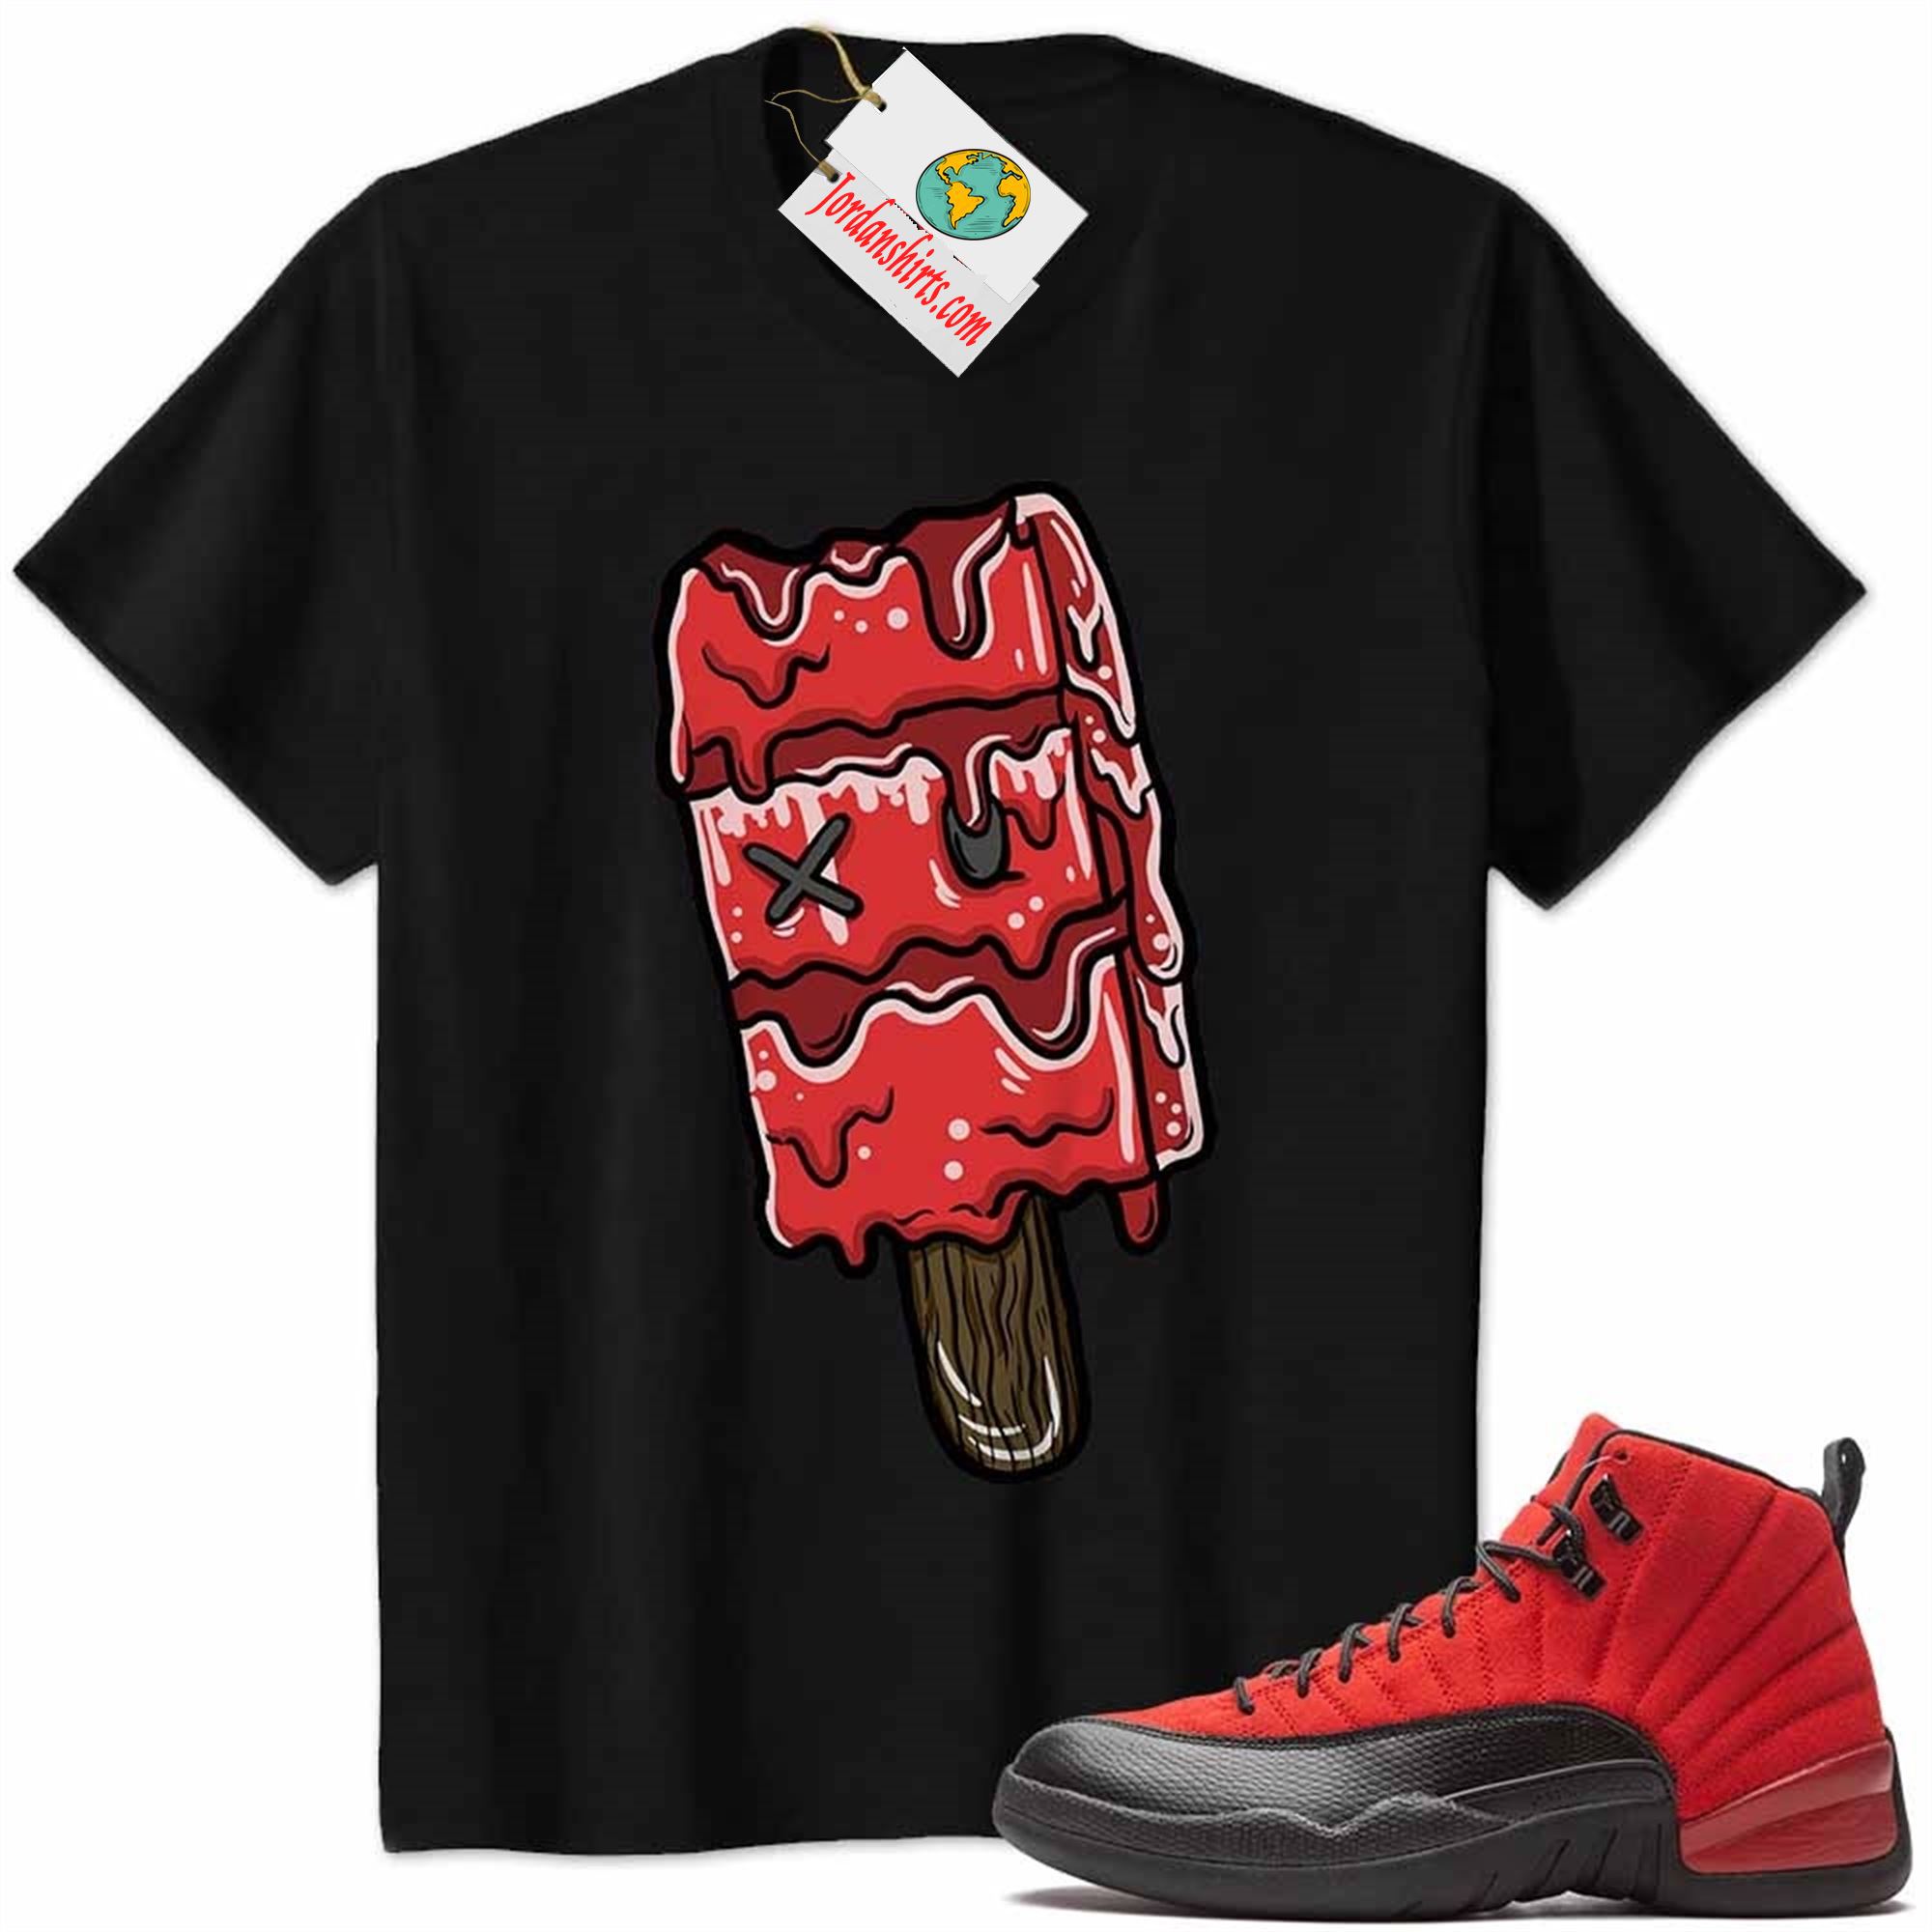 Jordan 12 Shirt, Ice Cream Dripping Black Air Jordan 12 Reverse Flu Game 12s Full Size Up To 5xl